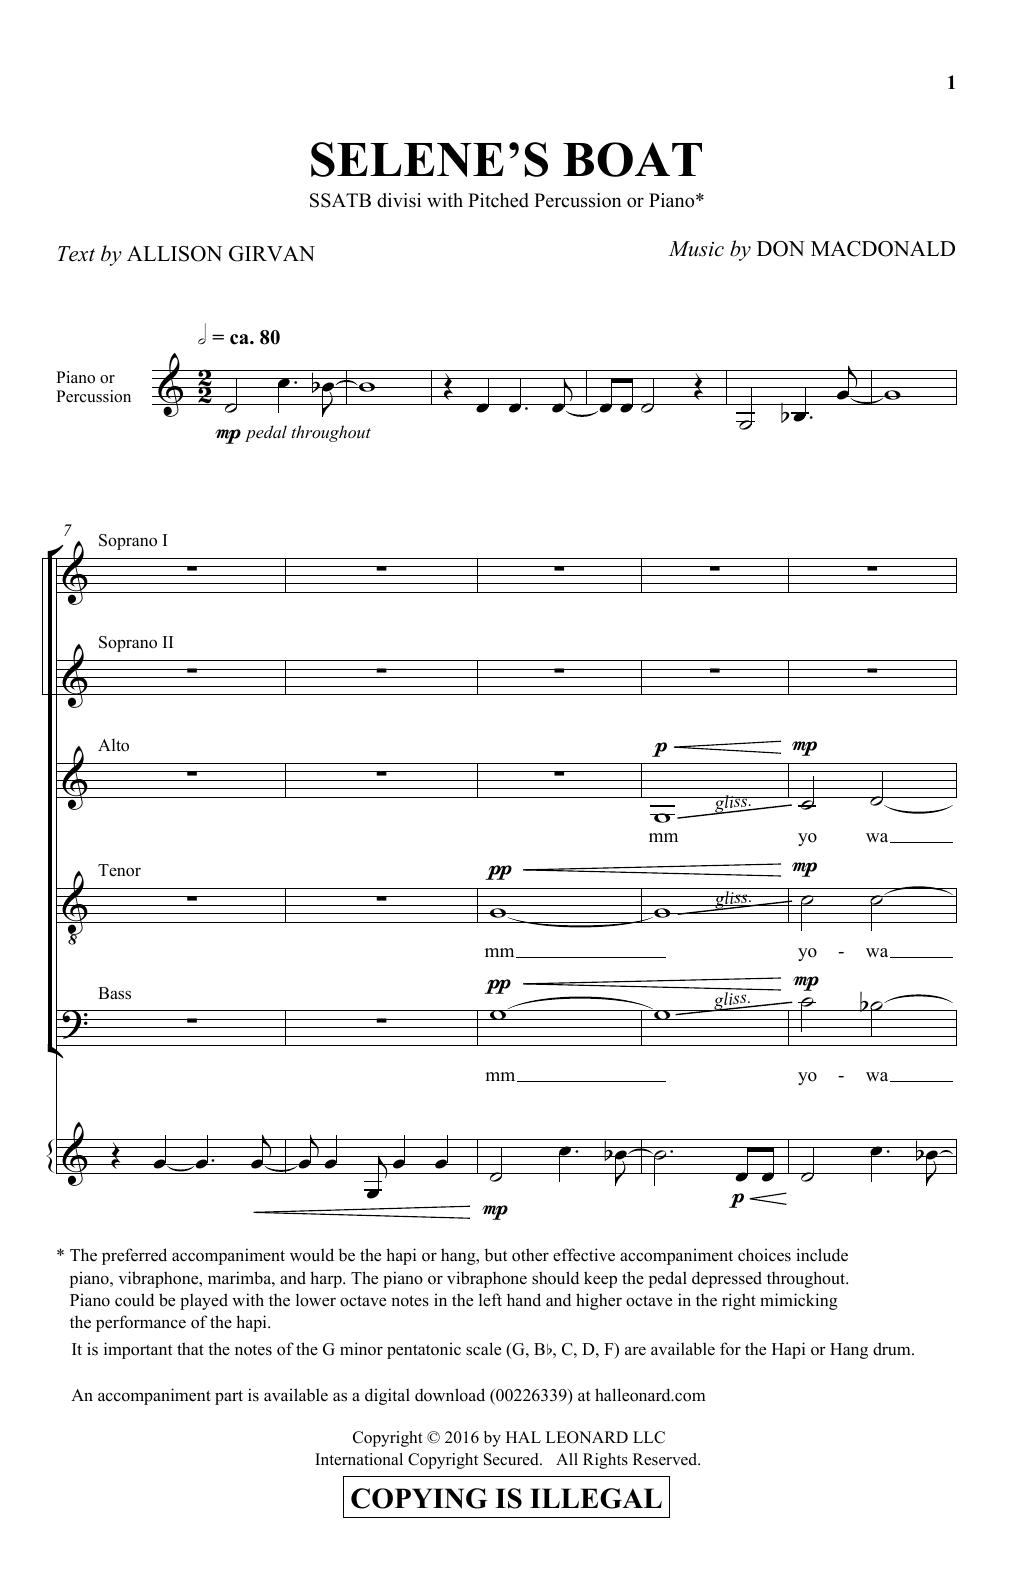 Don MacDonald Selene's Boat Sheet Music Notes & Chords for SATB - Download or Print PDF